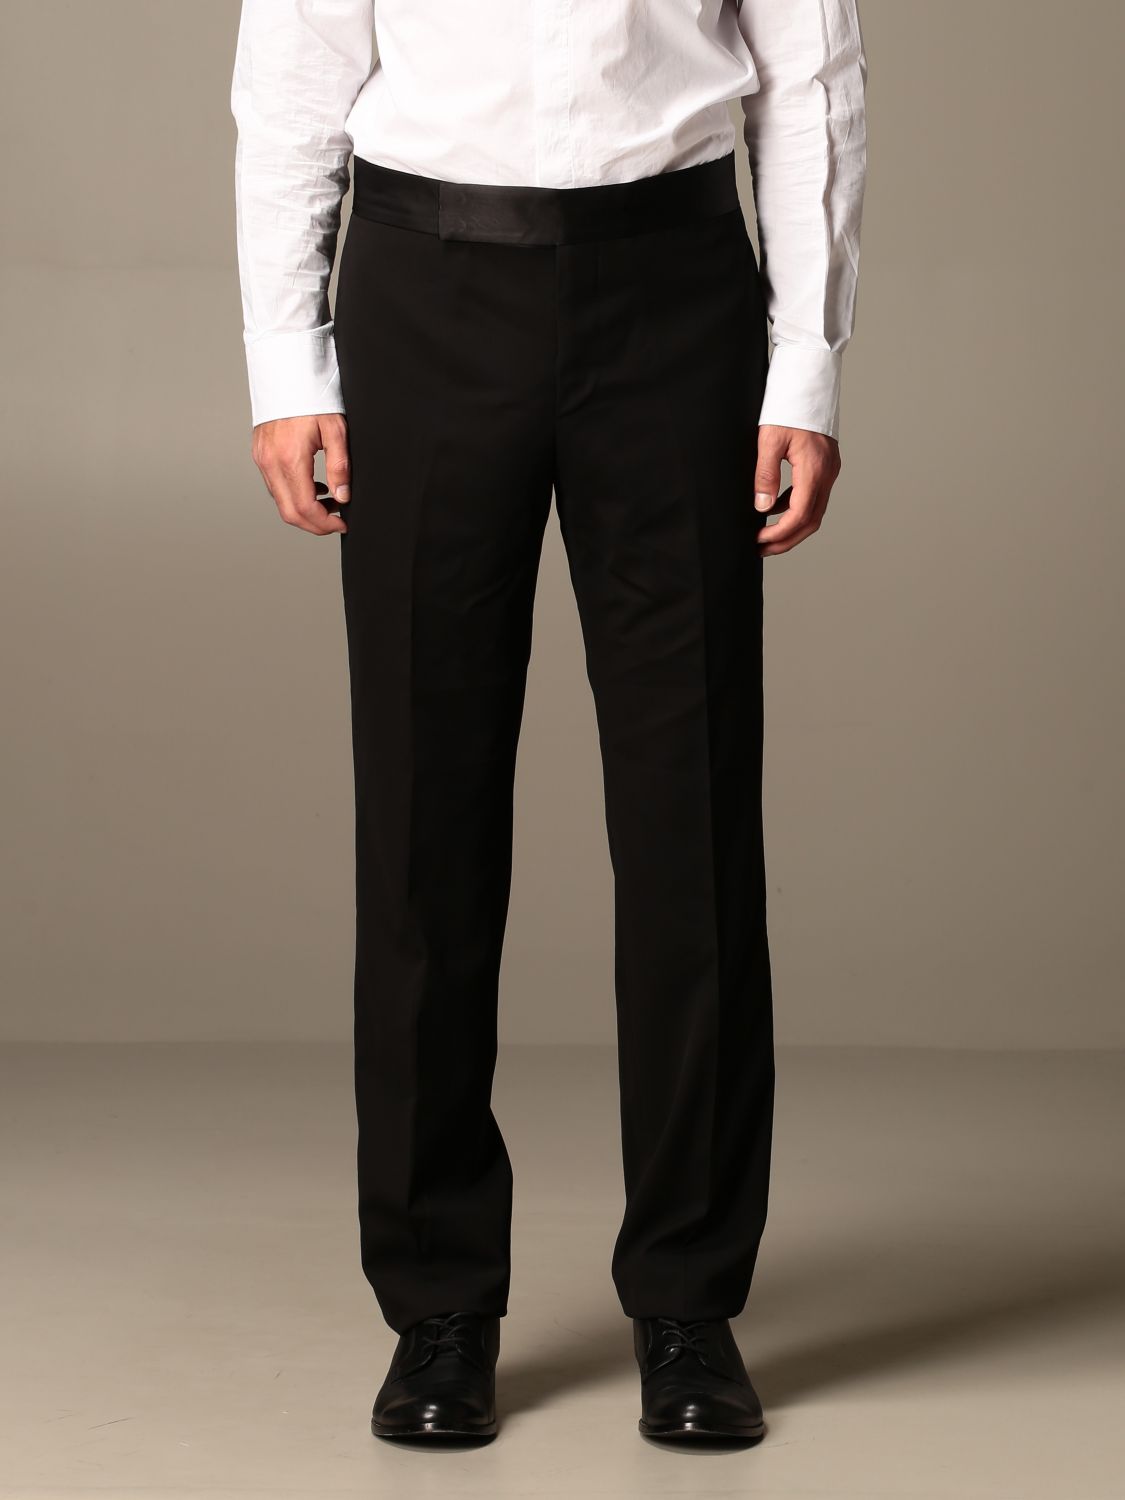 Giorgio Armani Outlet: tuxedo suit in virgin wool - Black | Giorgio Armani  suit 8WGAS001 T0075 online on 